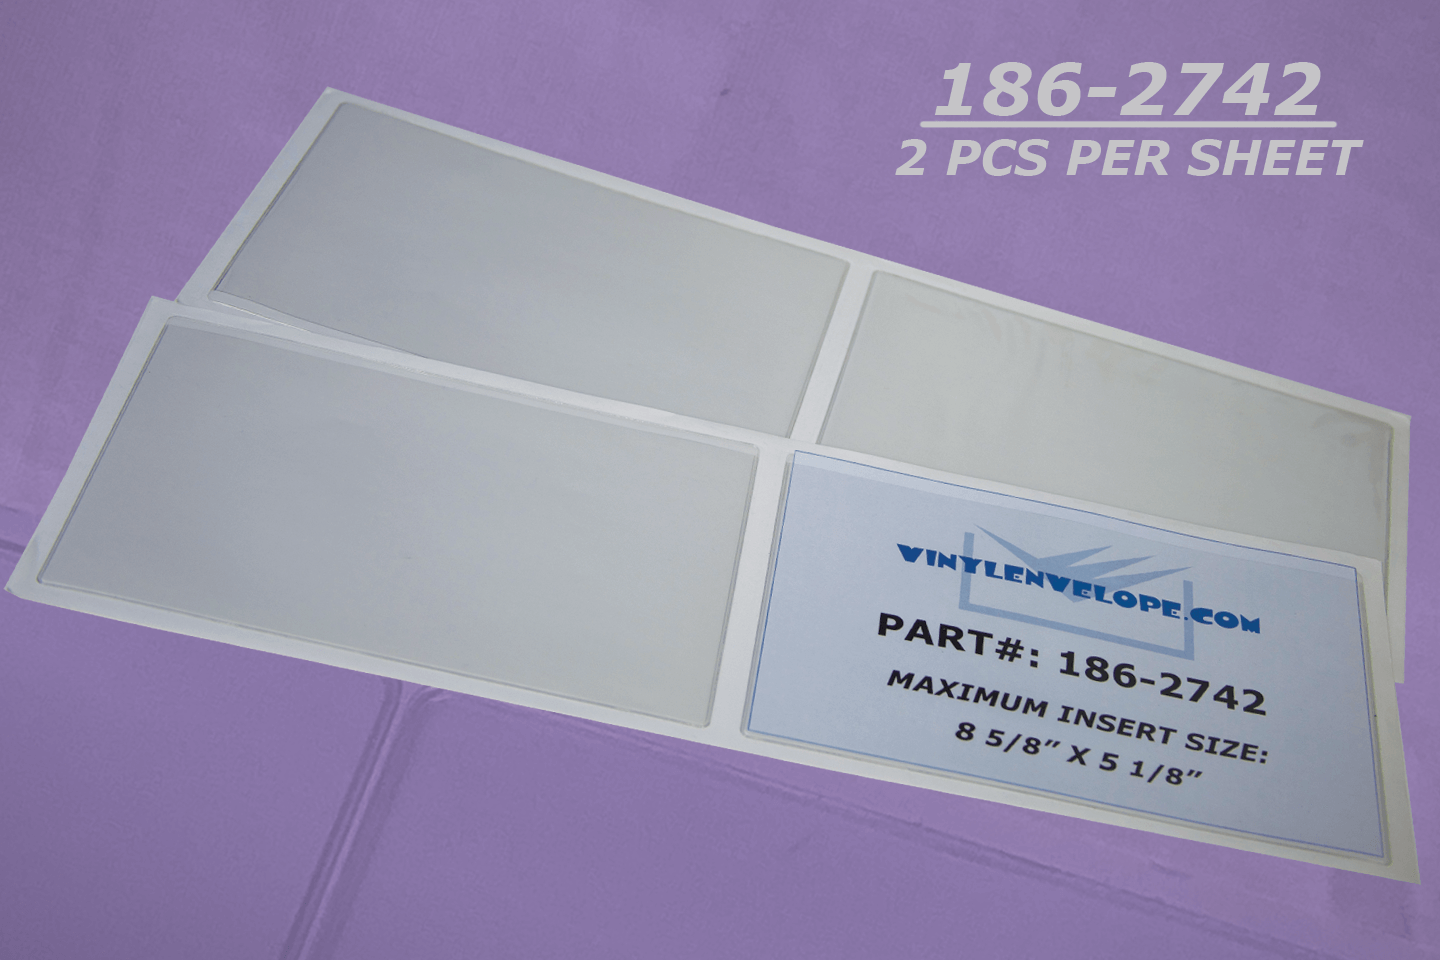 9 x 5 1/4" press-on adhesive vinyl pouch